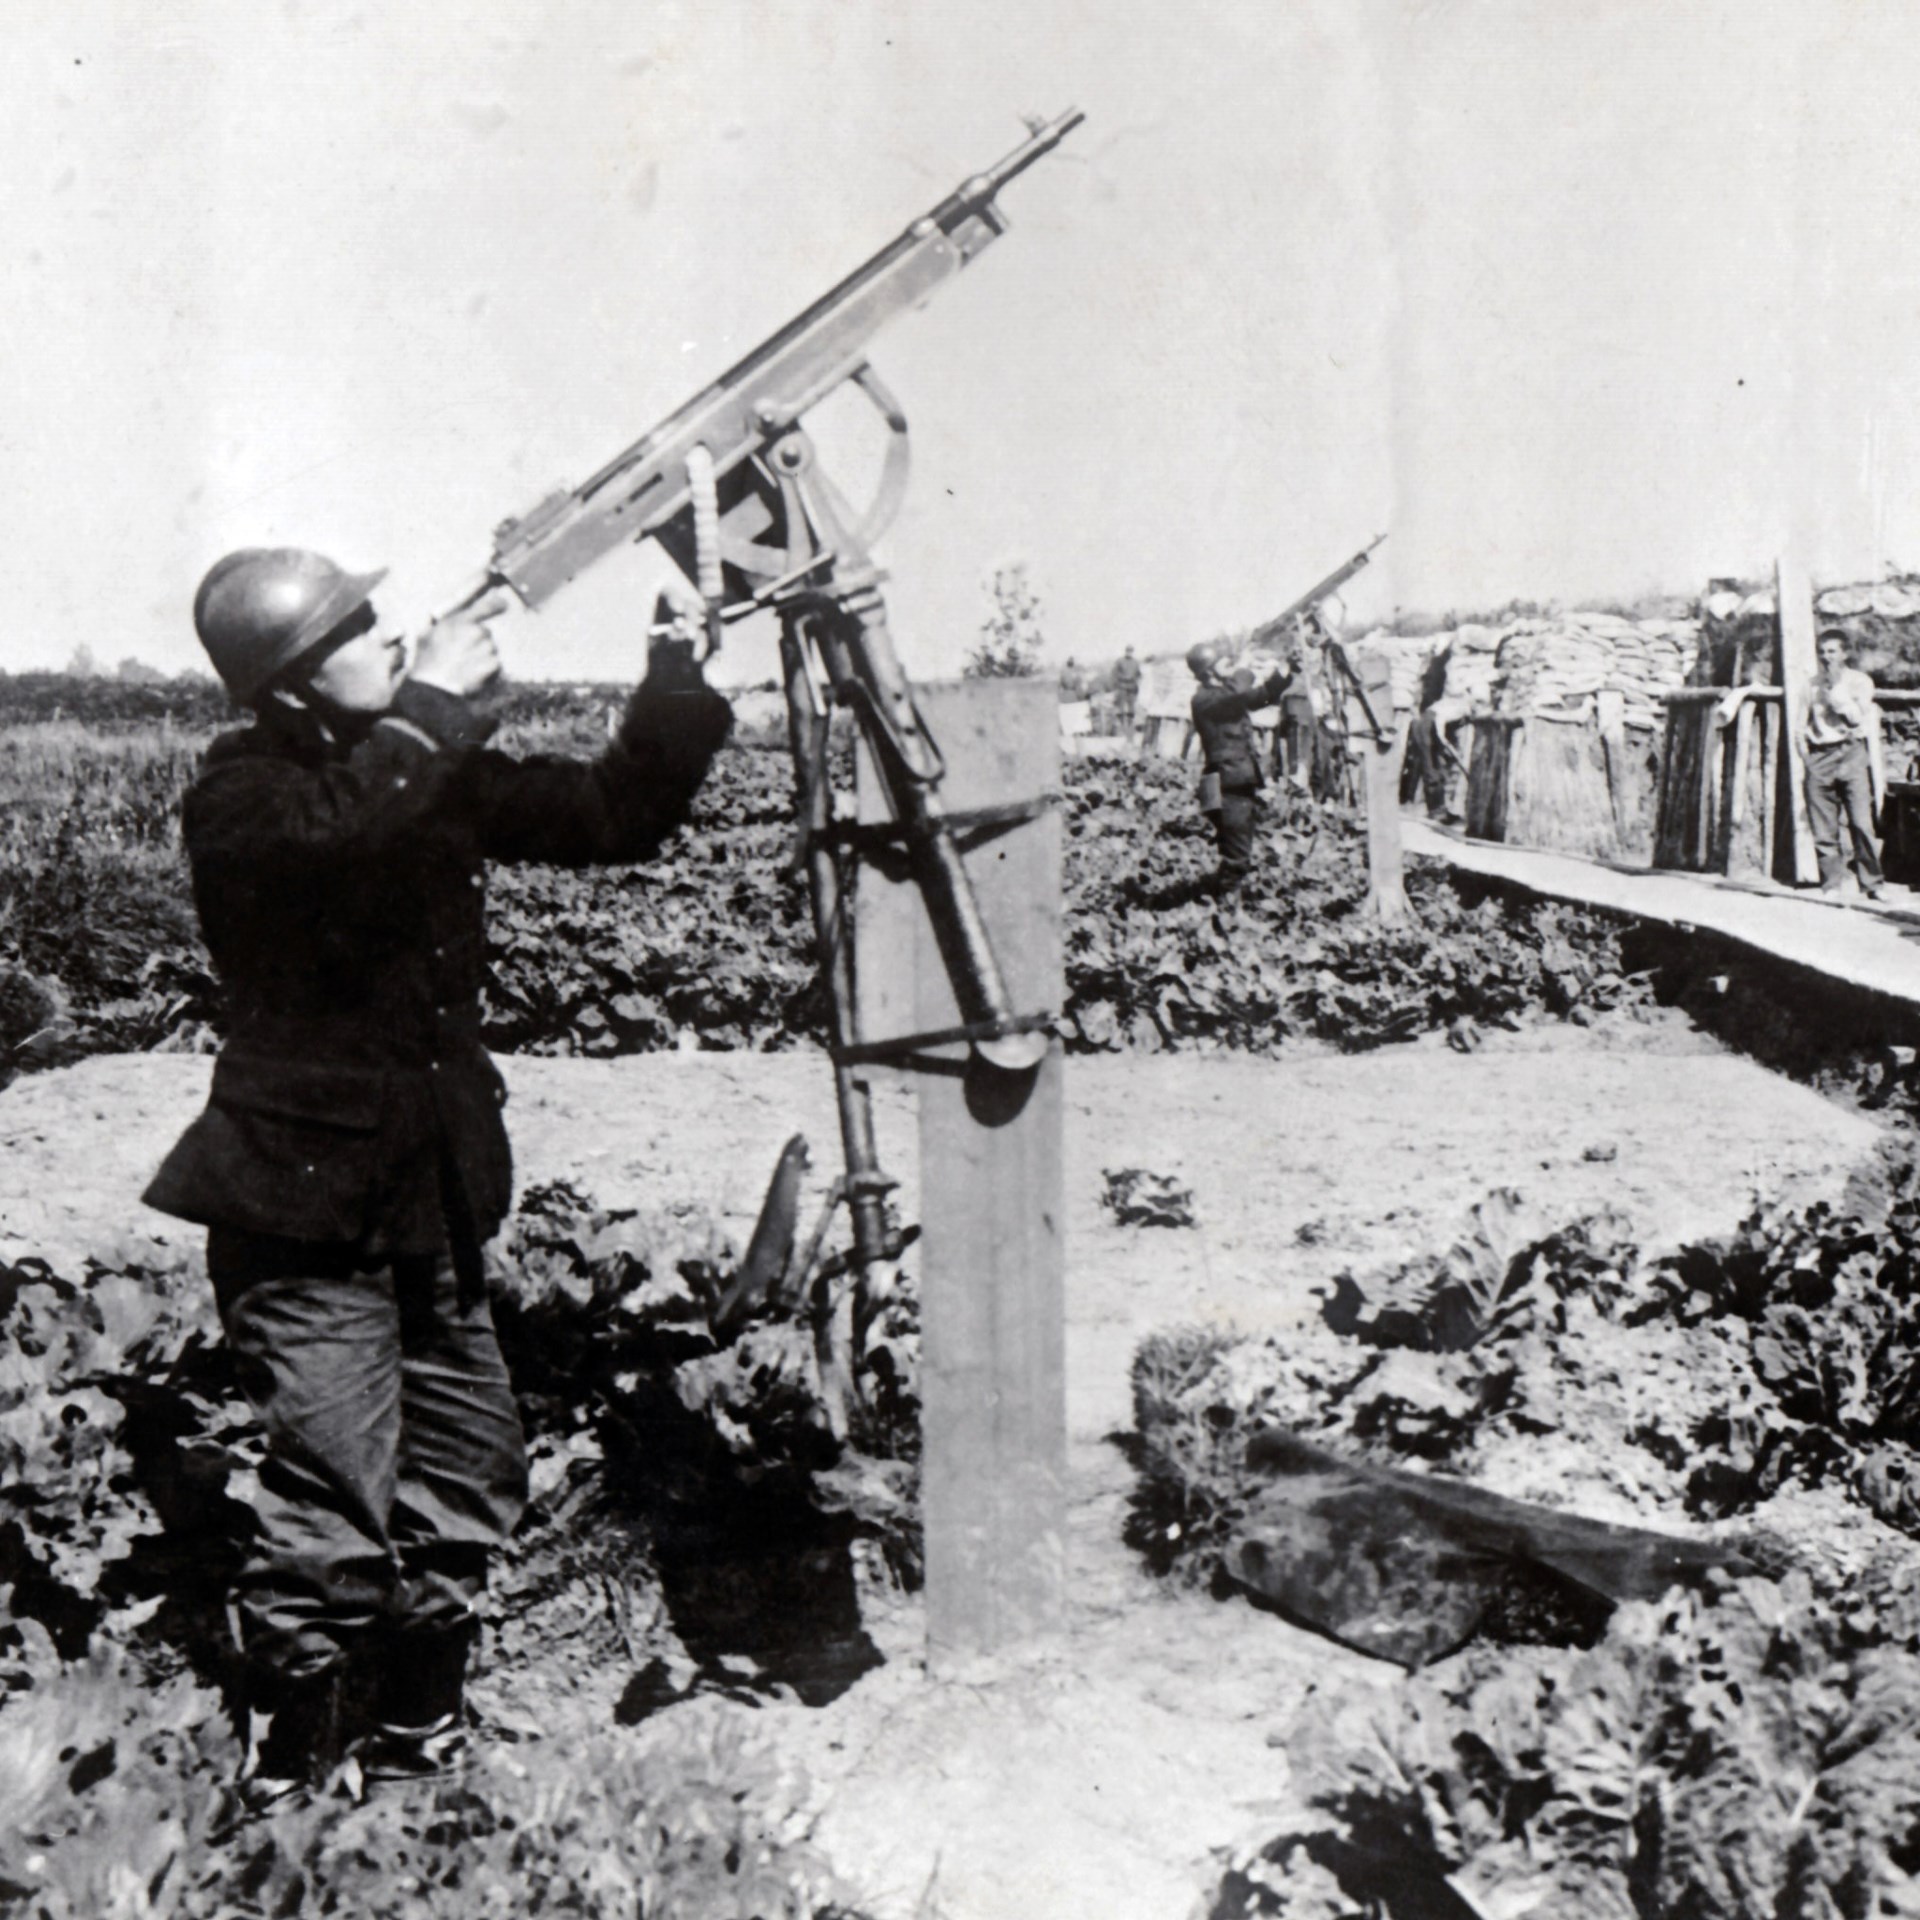 Belgian M1895 guns set up to provide anti-aircraft defense on the Western Front. NARA